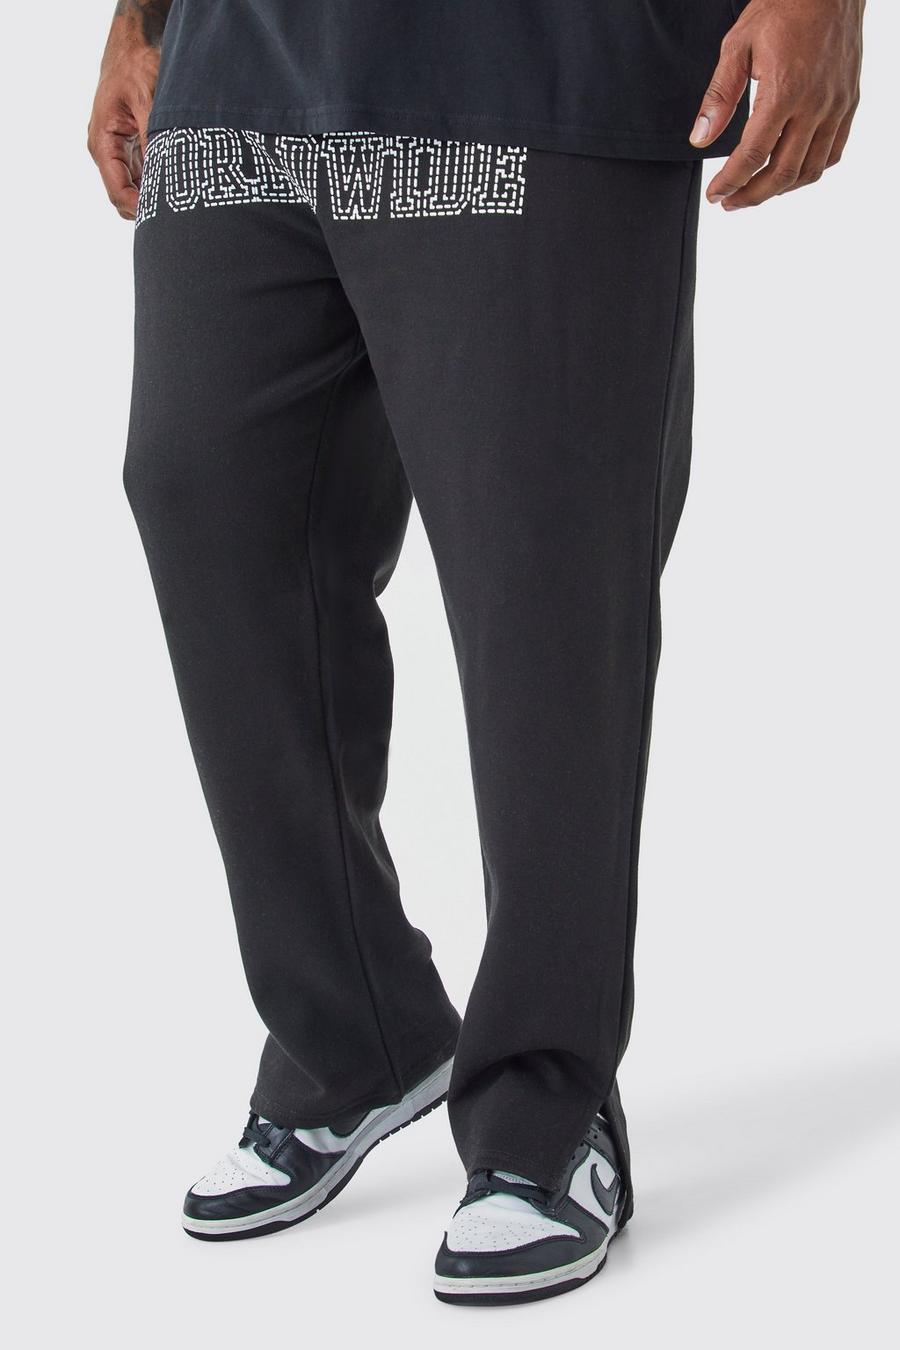 Pantaloni tuta Plus Size Worldwide neri con spacco sul fondo, Black image number 1